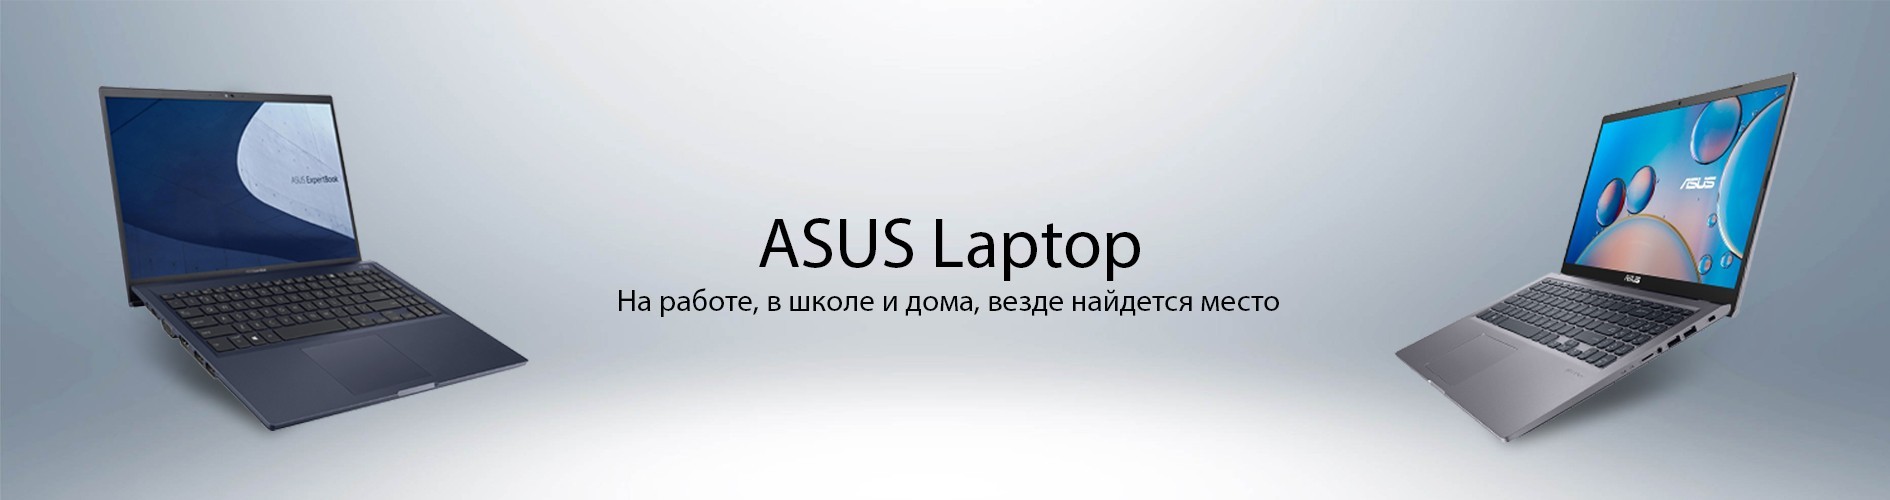 Asus Laptop Tashkent Uzbekistan